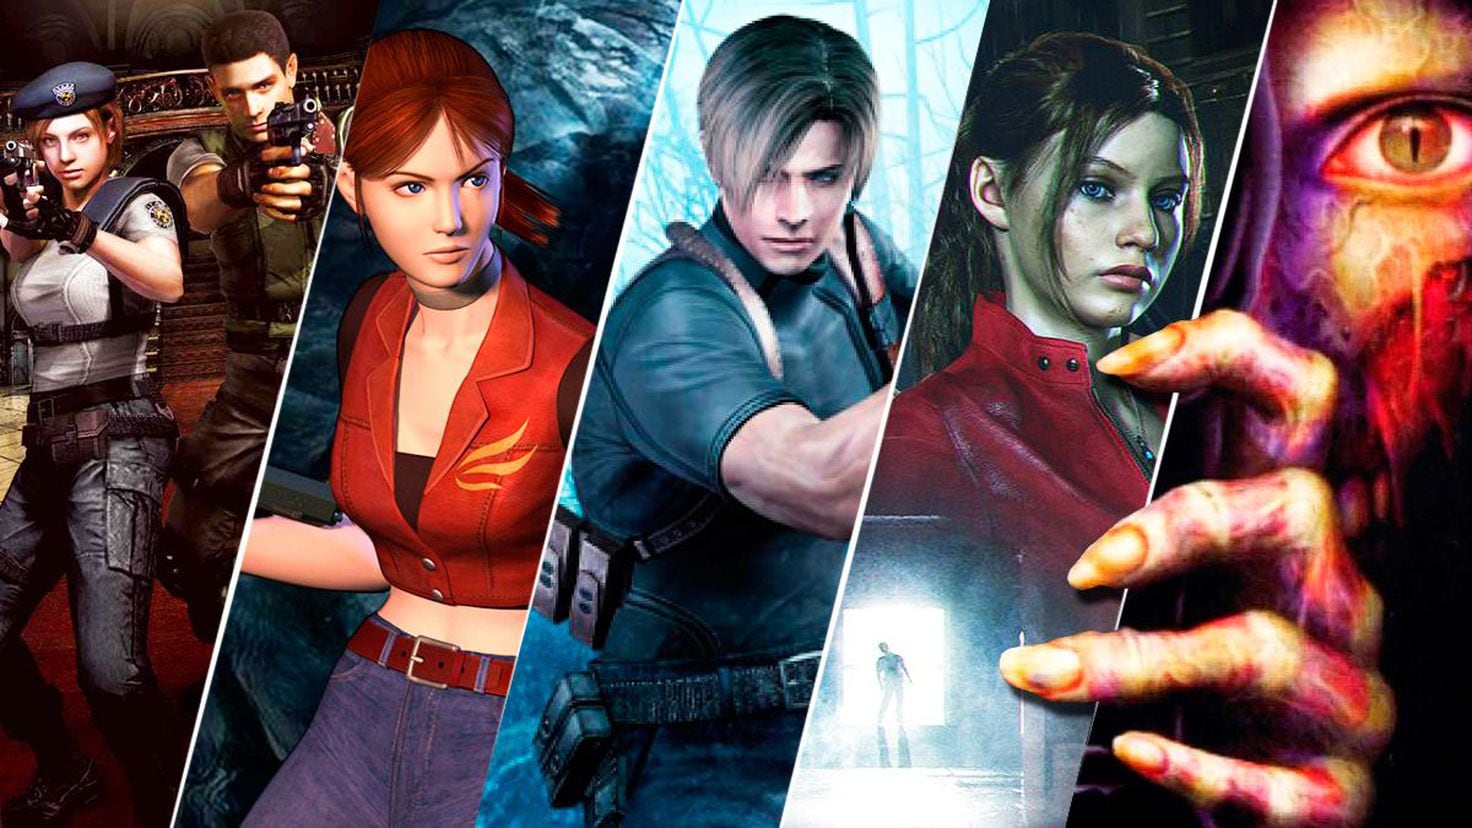 Comunidad de Steam :: Video :: Resident Evil REmake Gamecube vs PC